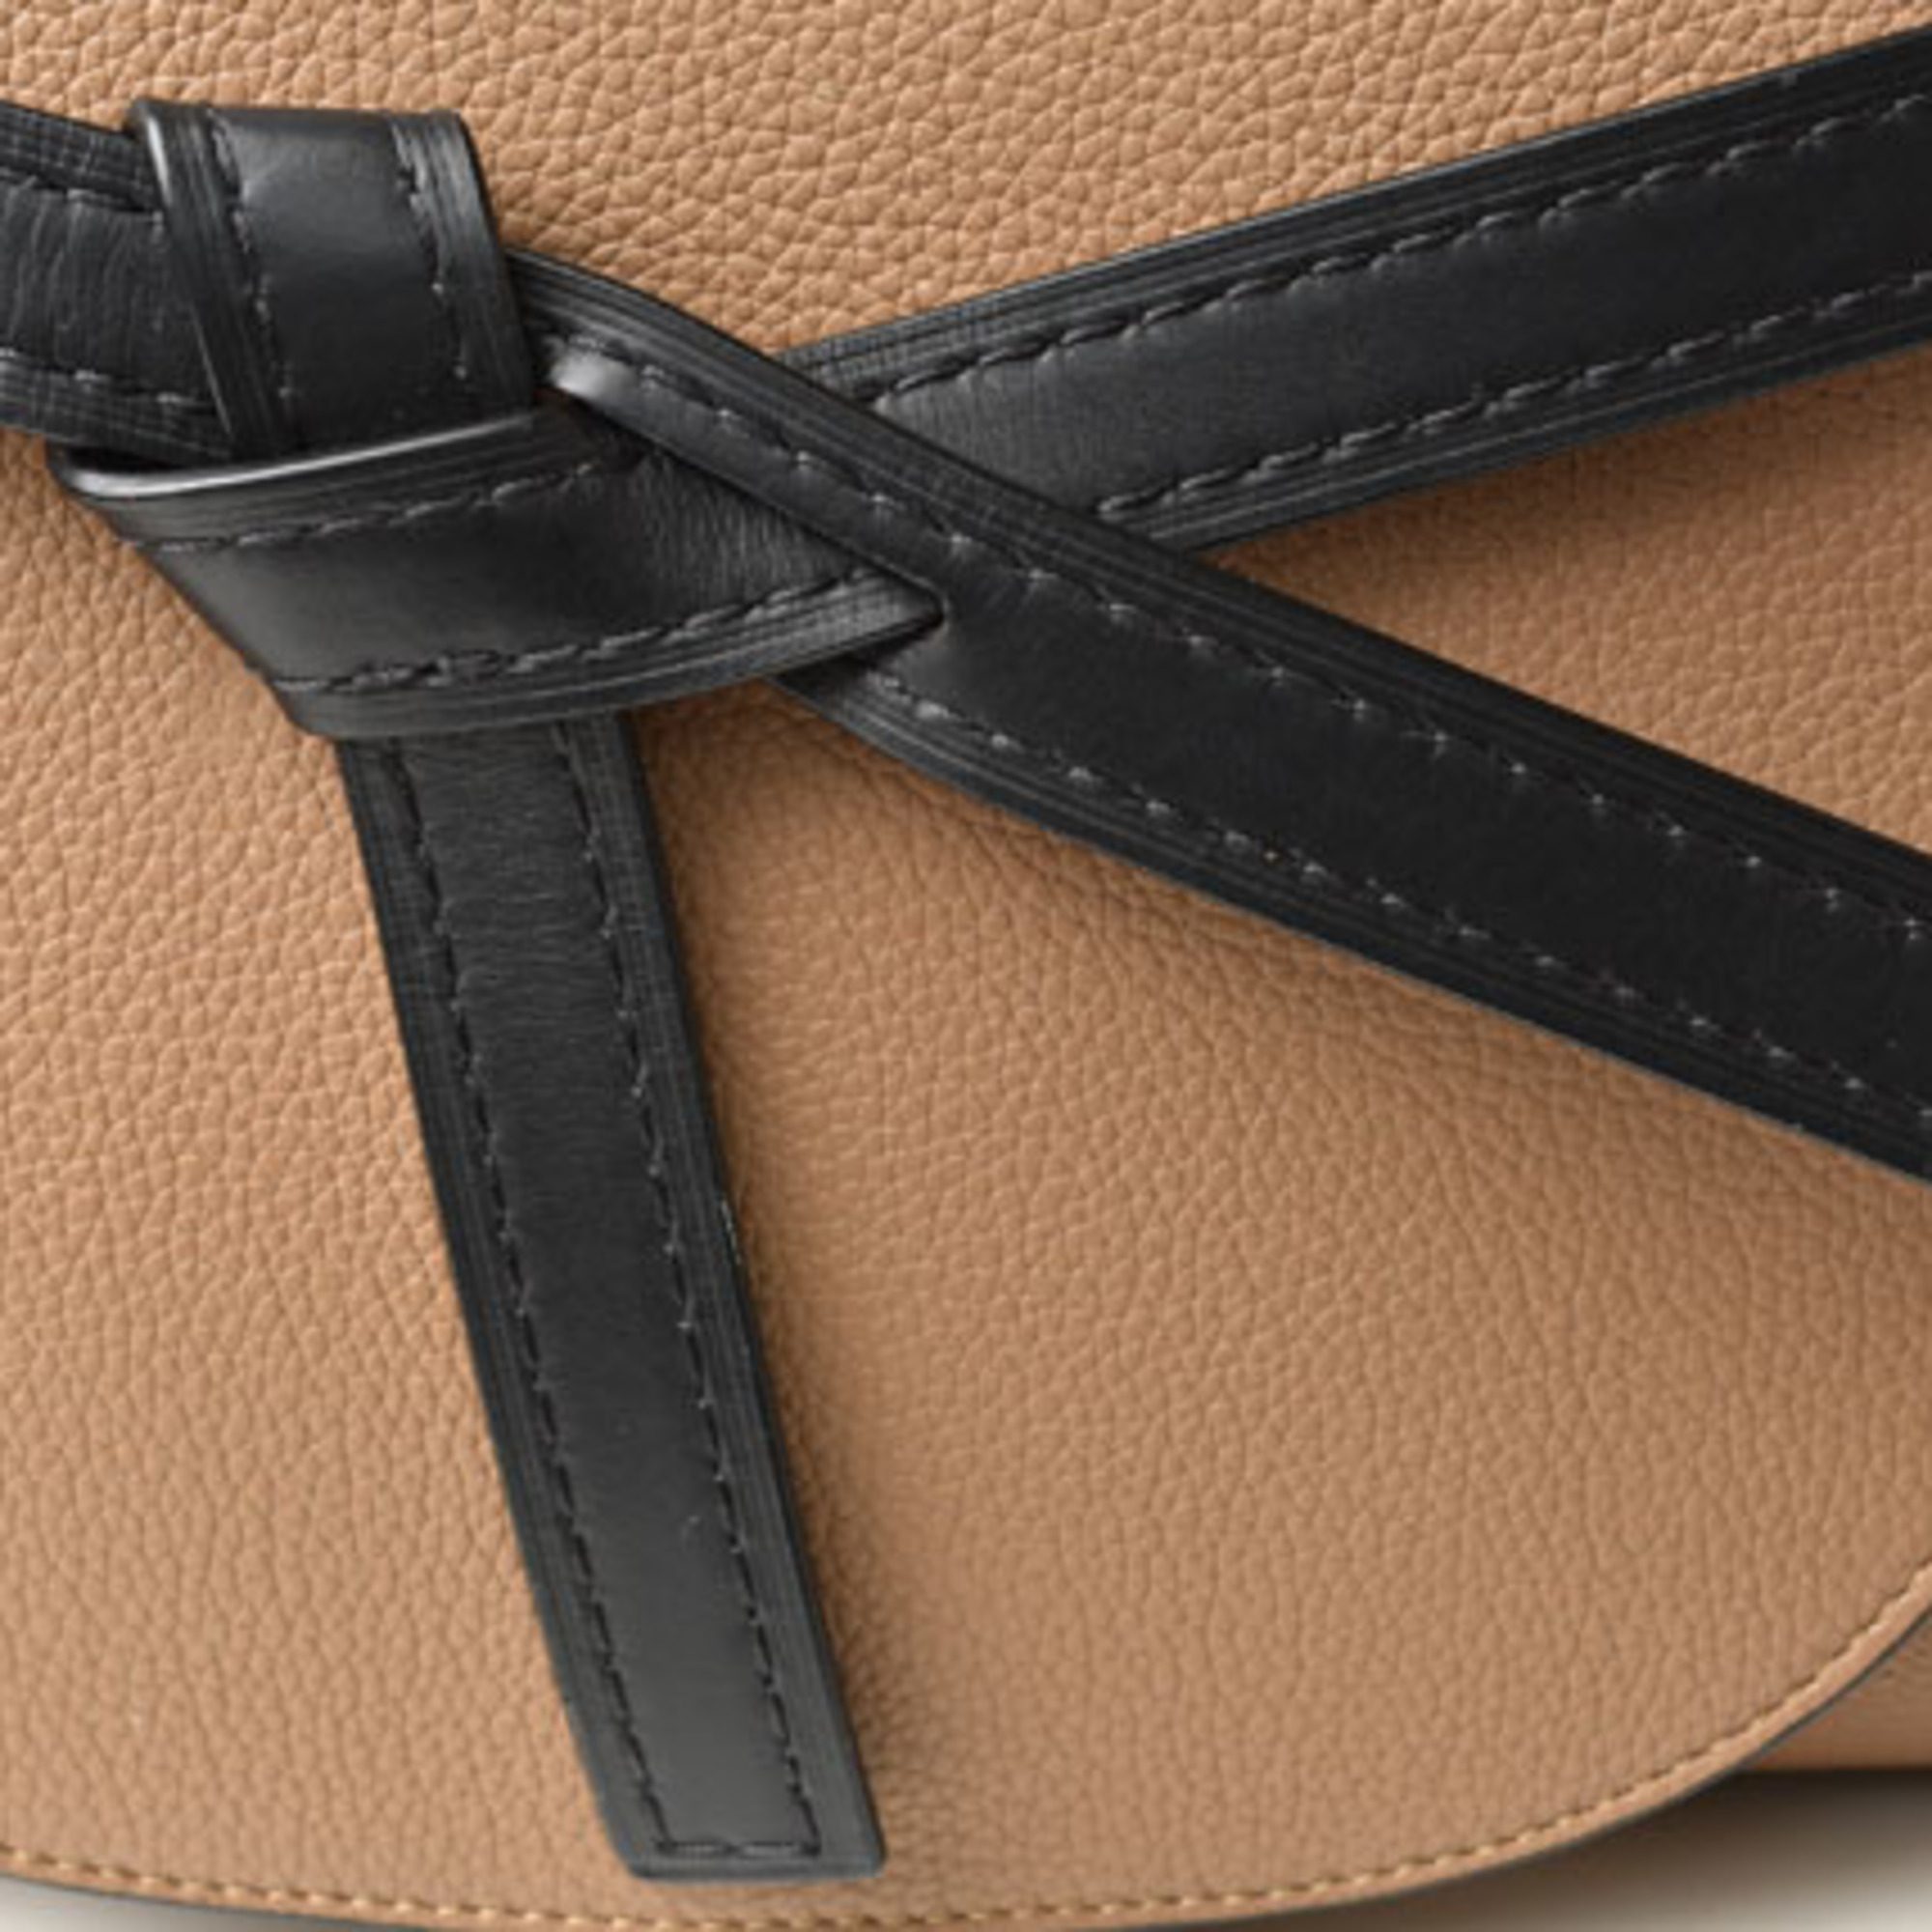 LOEWE Handbag/Gate Small/Shoulder Bag 2way Leather Brown/Black 321.12U61